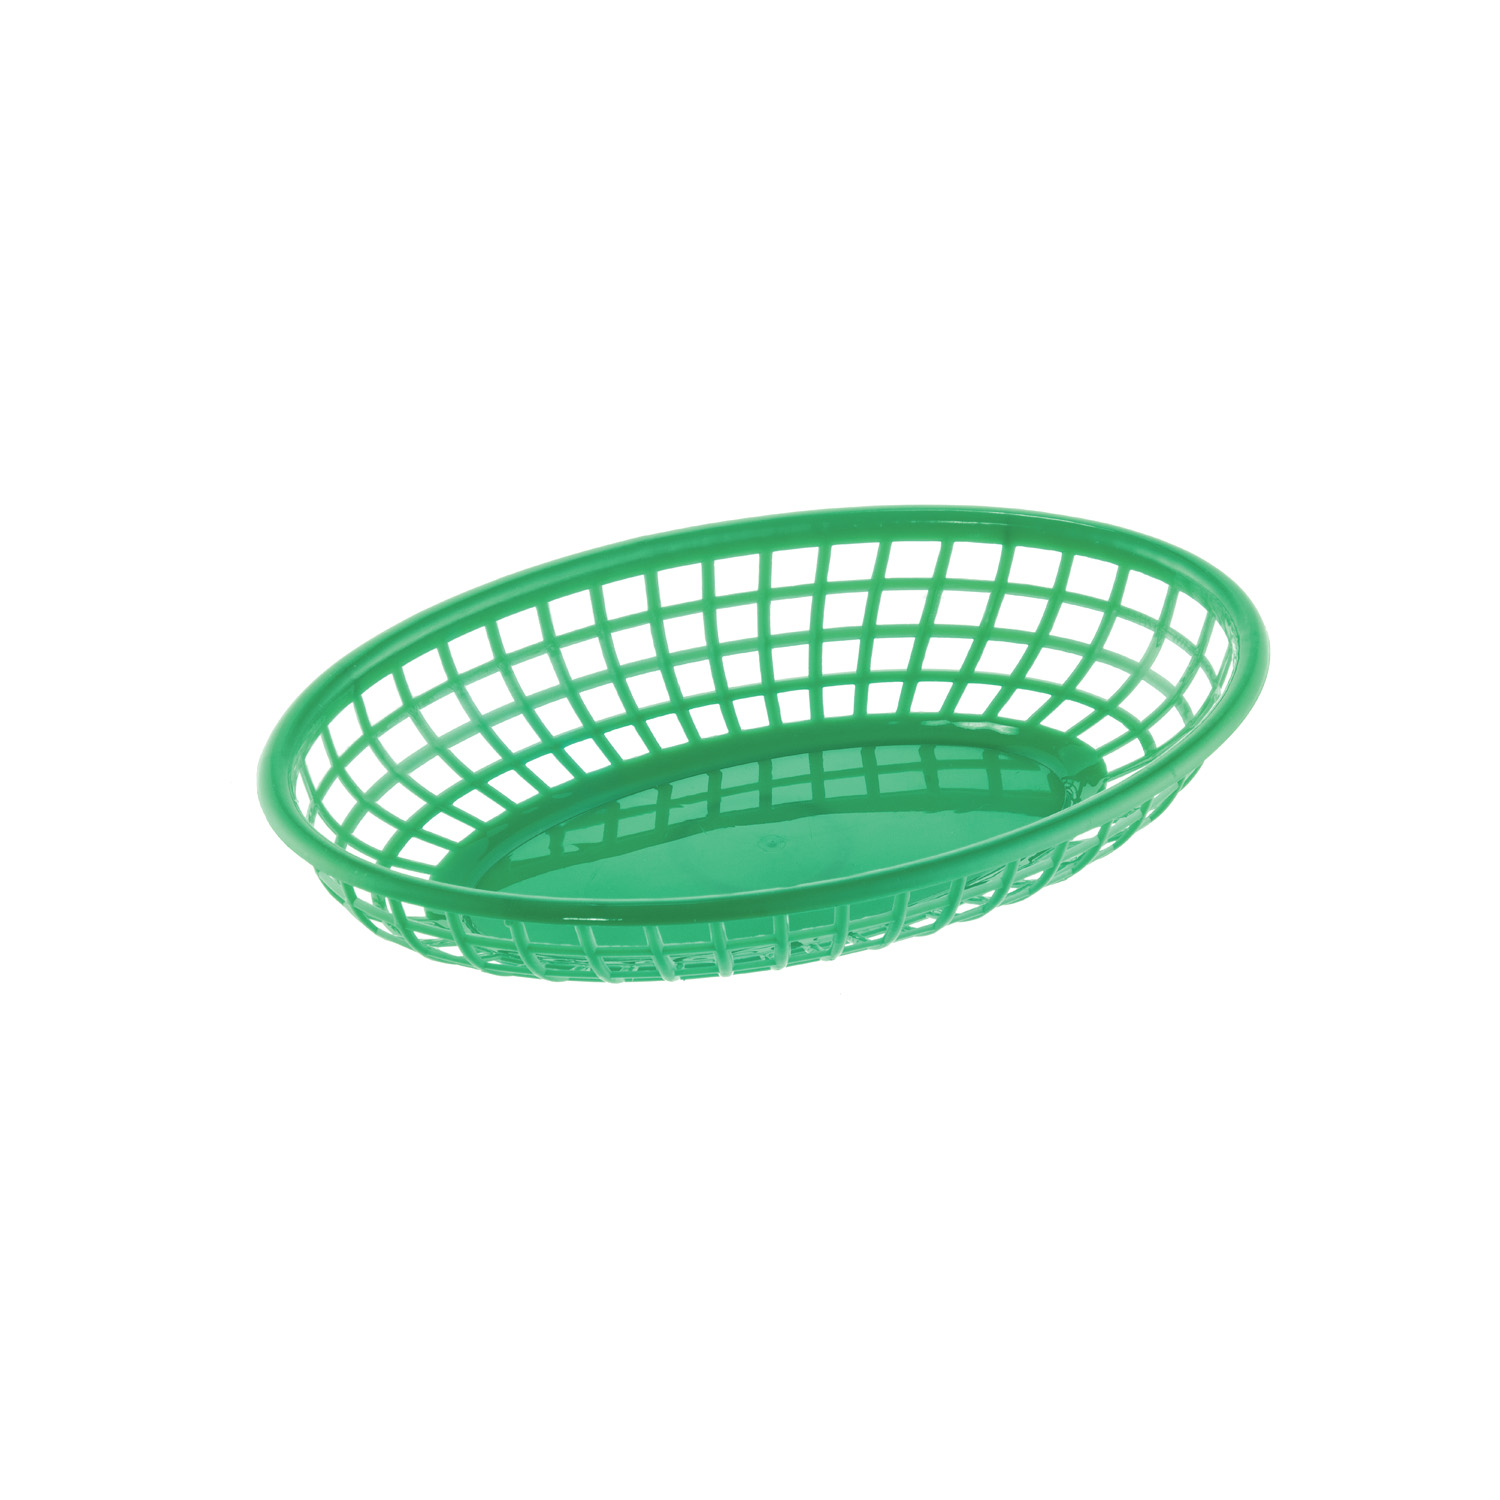 CAC China TTFB-09GN Green Plastic Oval Fast Food Basket 9 1/4" L - 1 dozen